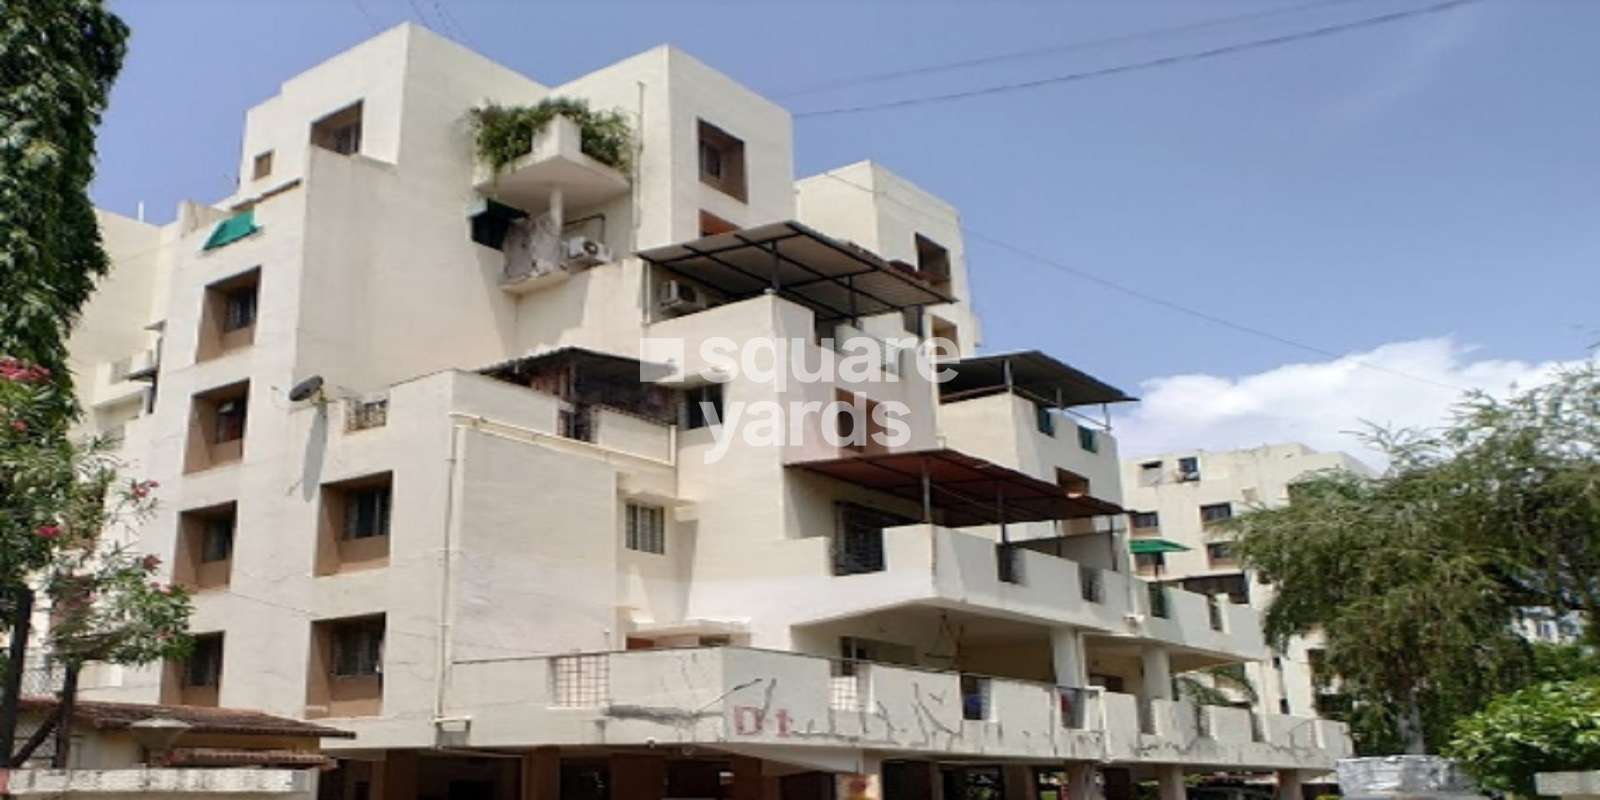 Ratan Apartment Cover Image